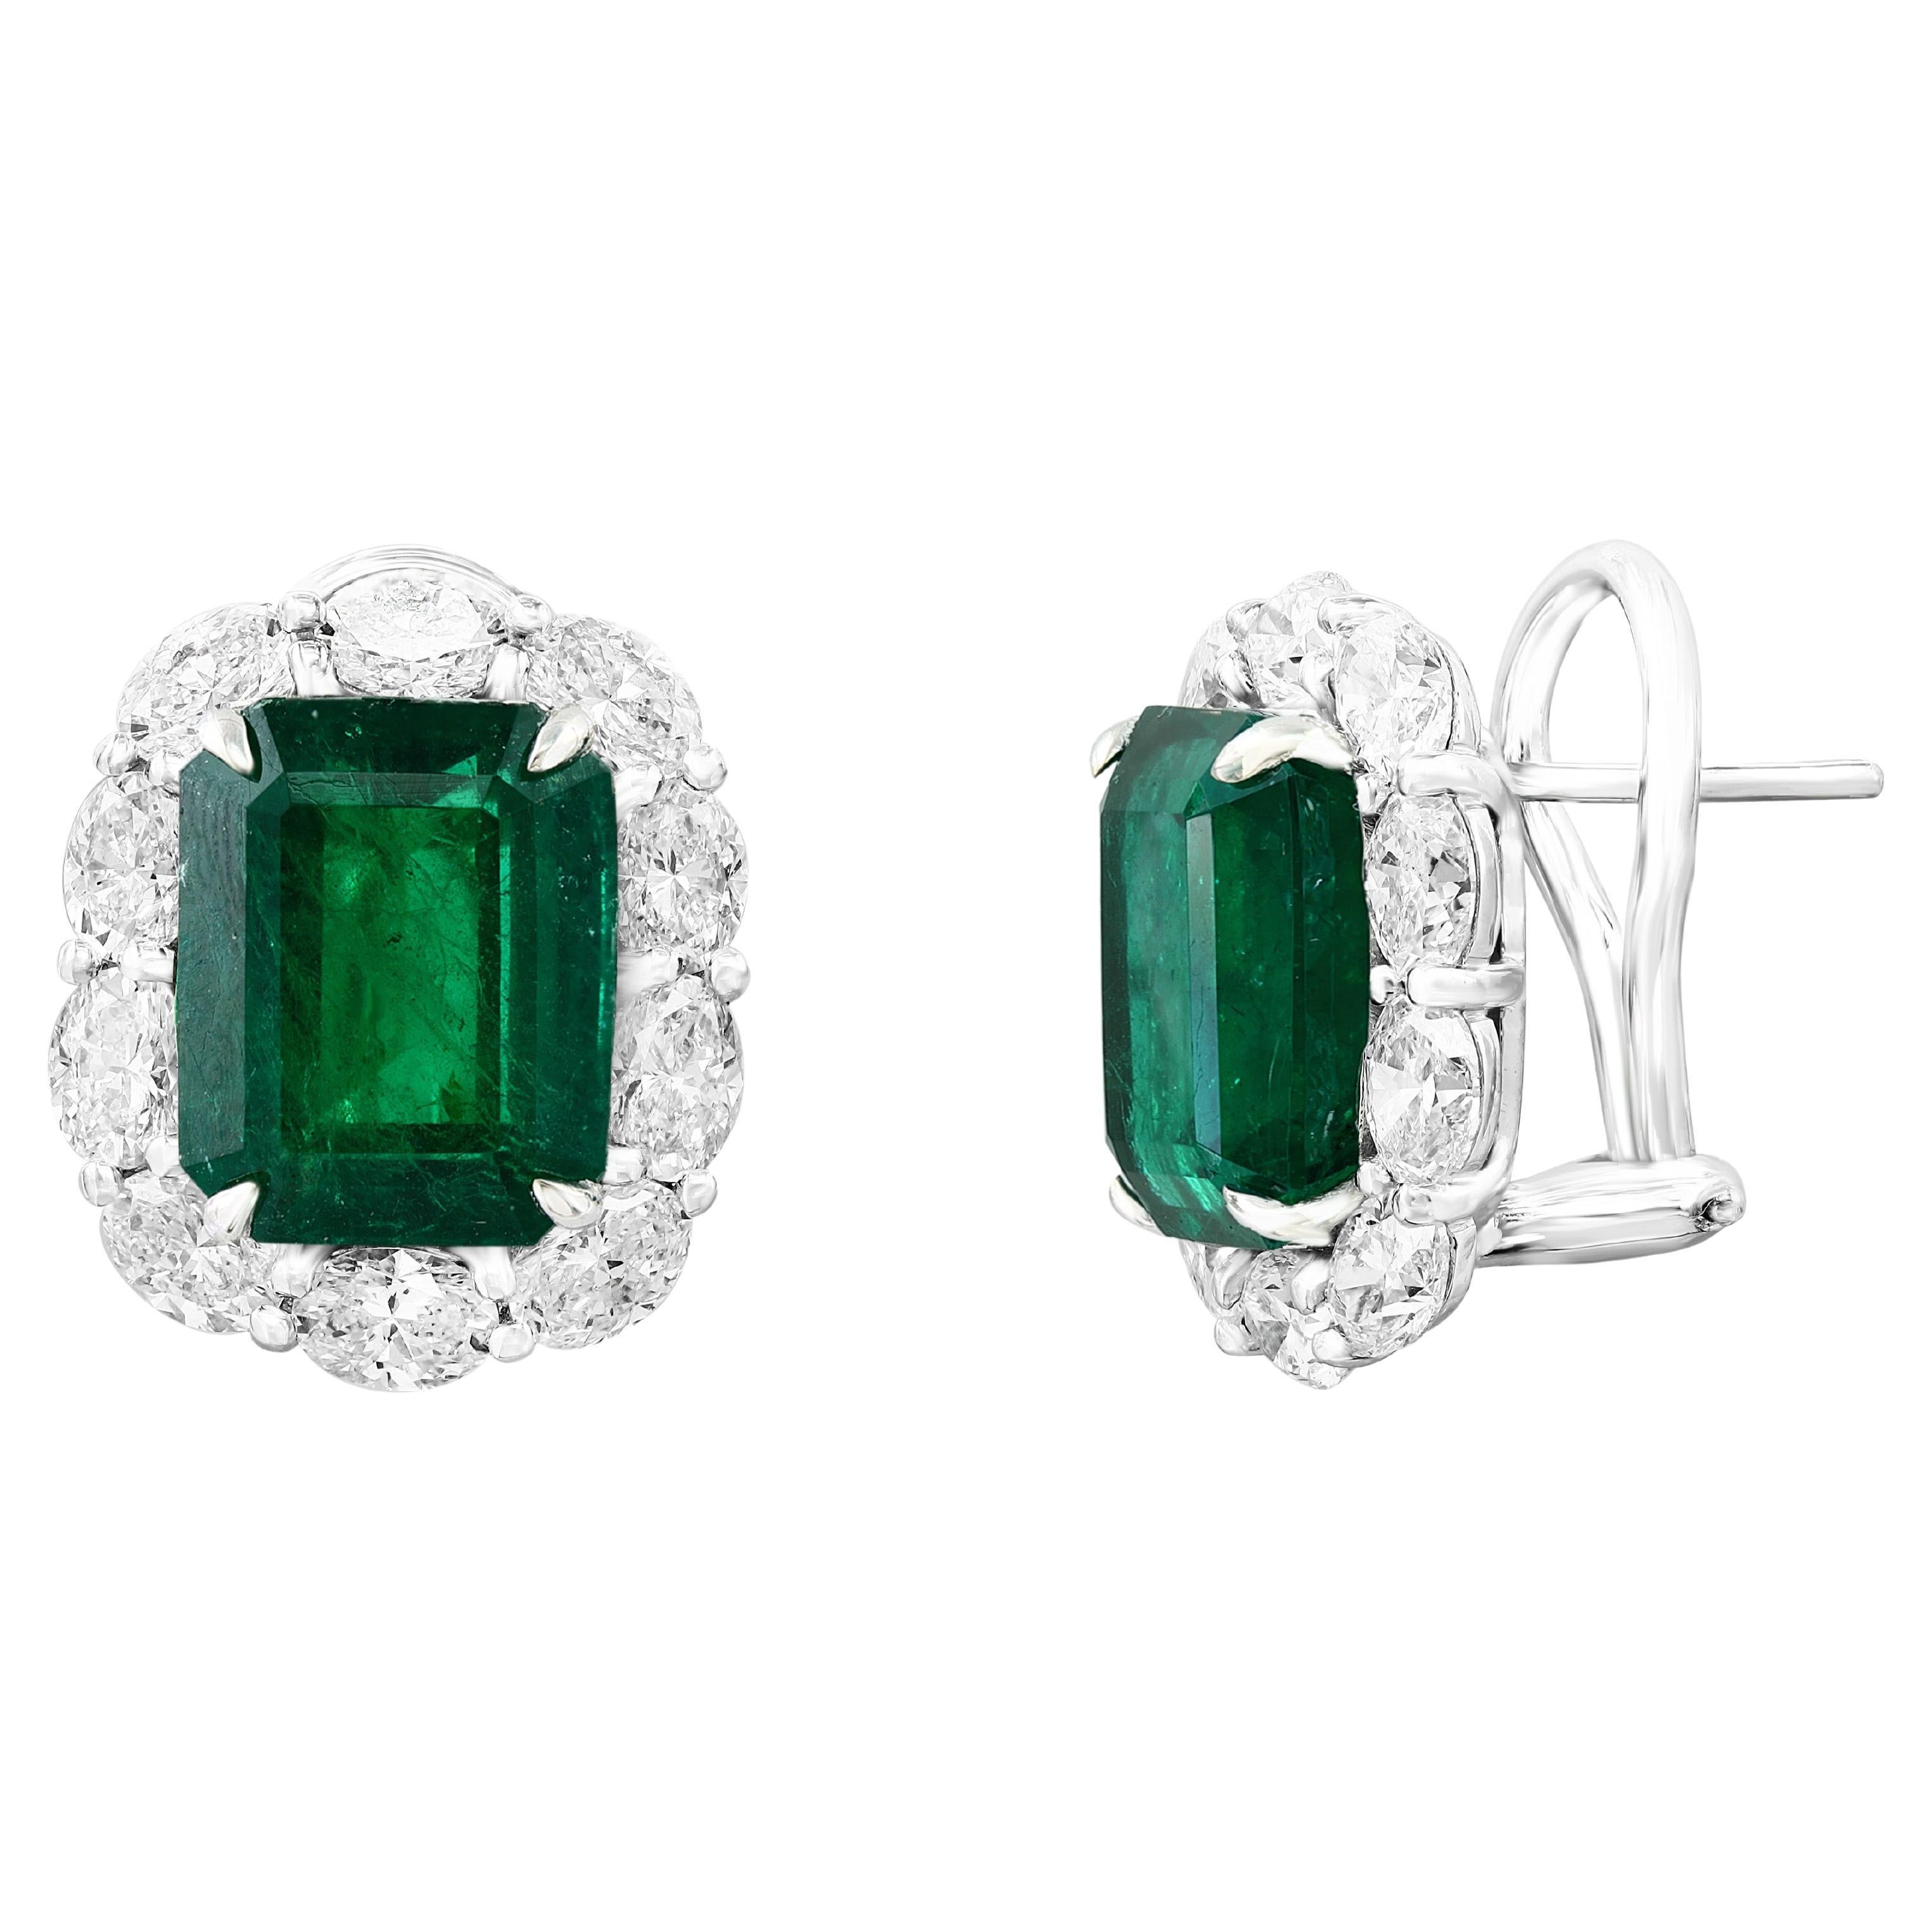 7.44 Carat Emerald Cut Emerald and Diamond Halo Earring in 18K White Gold